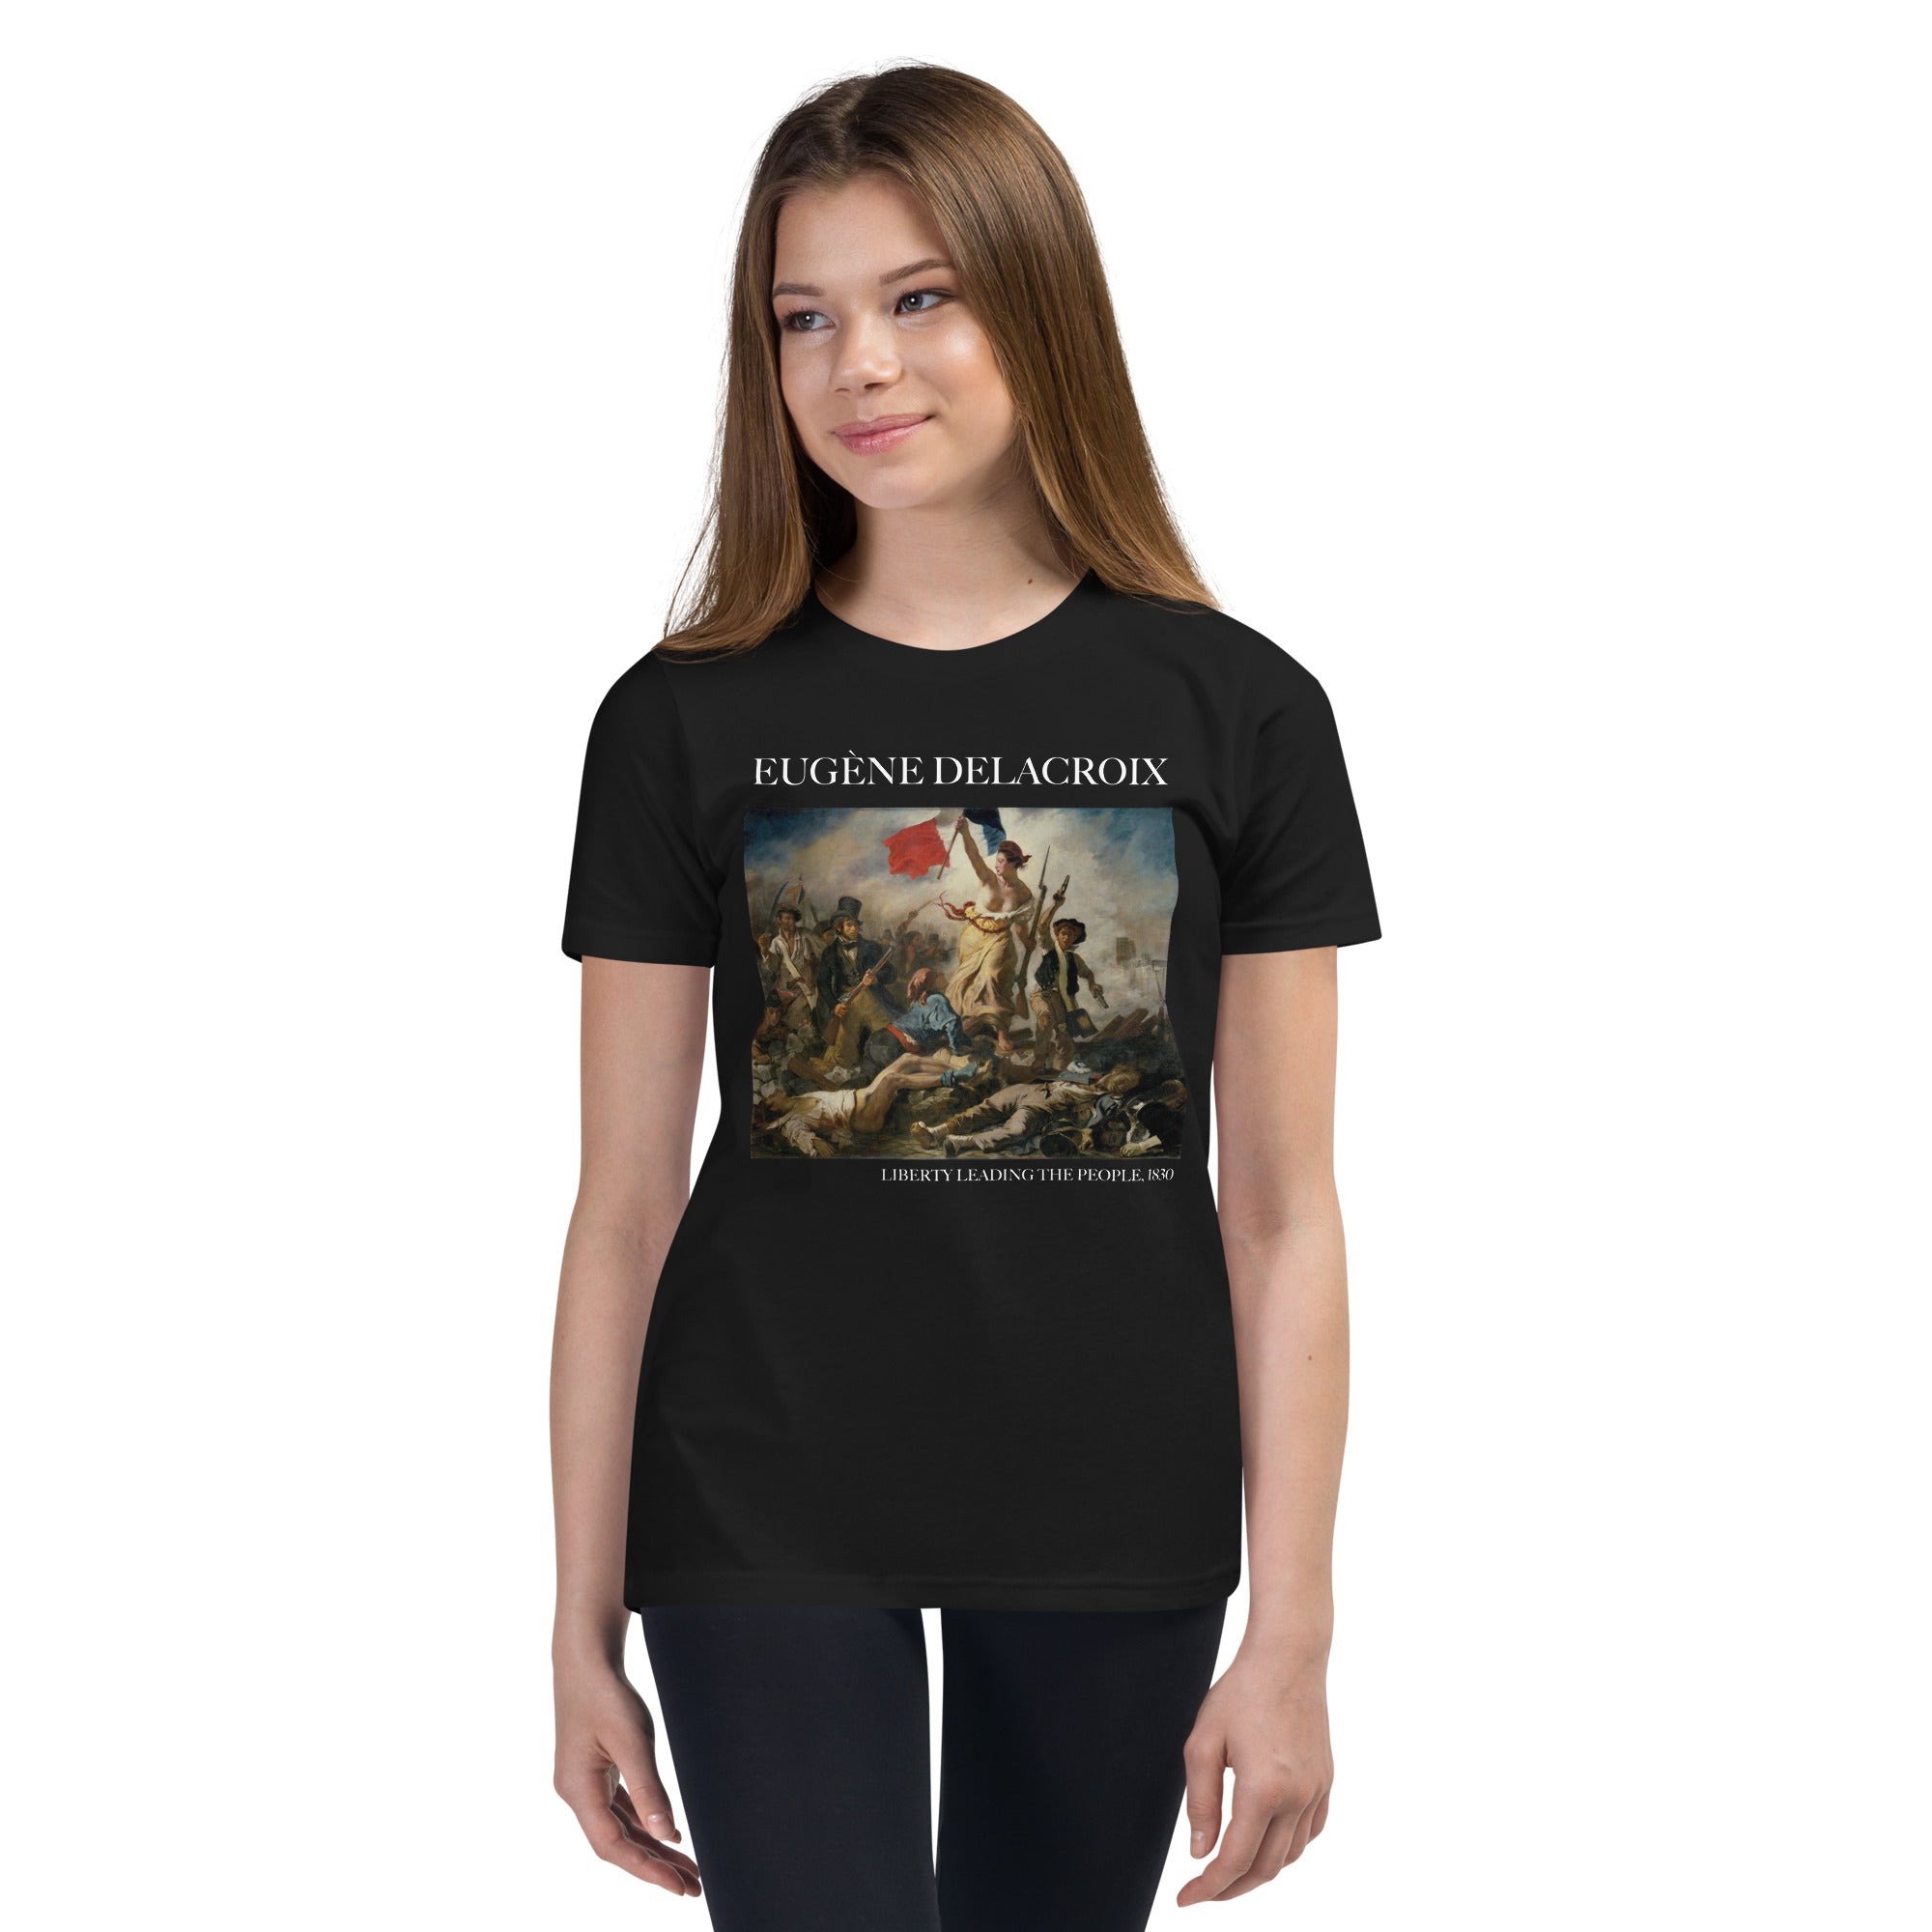 Eugène Delacroix 'Liberty Leading the People' Famous Painting Short Sleeve T-Shirt | Premium Youth Art Tee